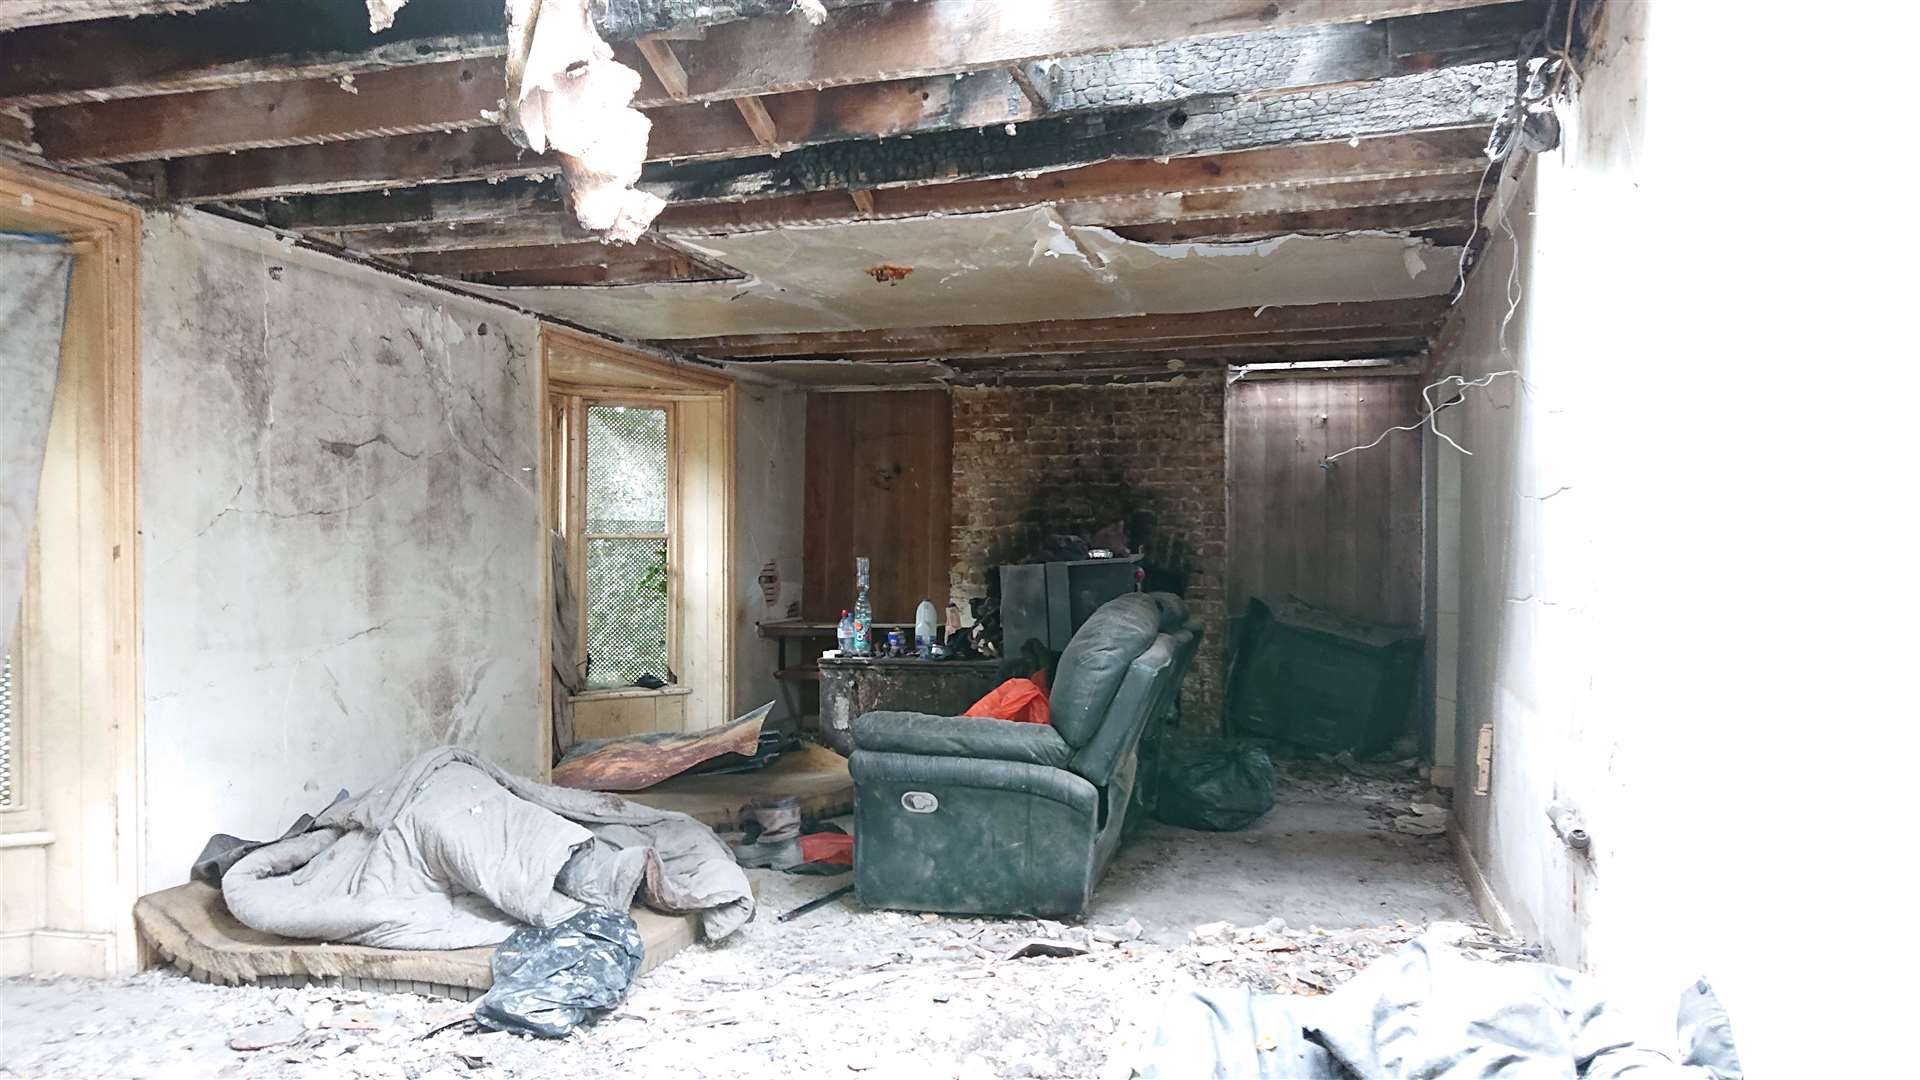 The inside of the derelict house, taken by Paul Jones